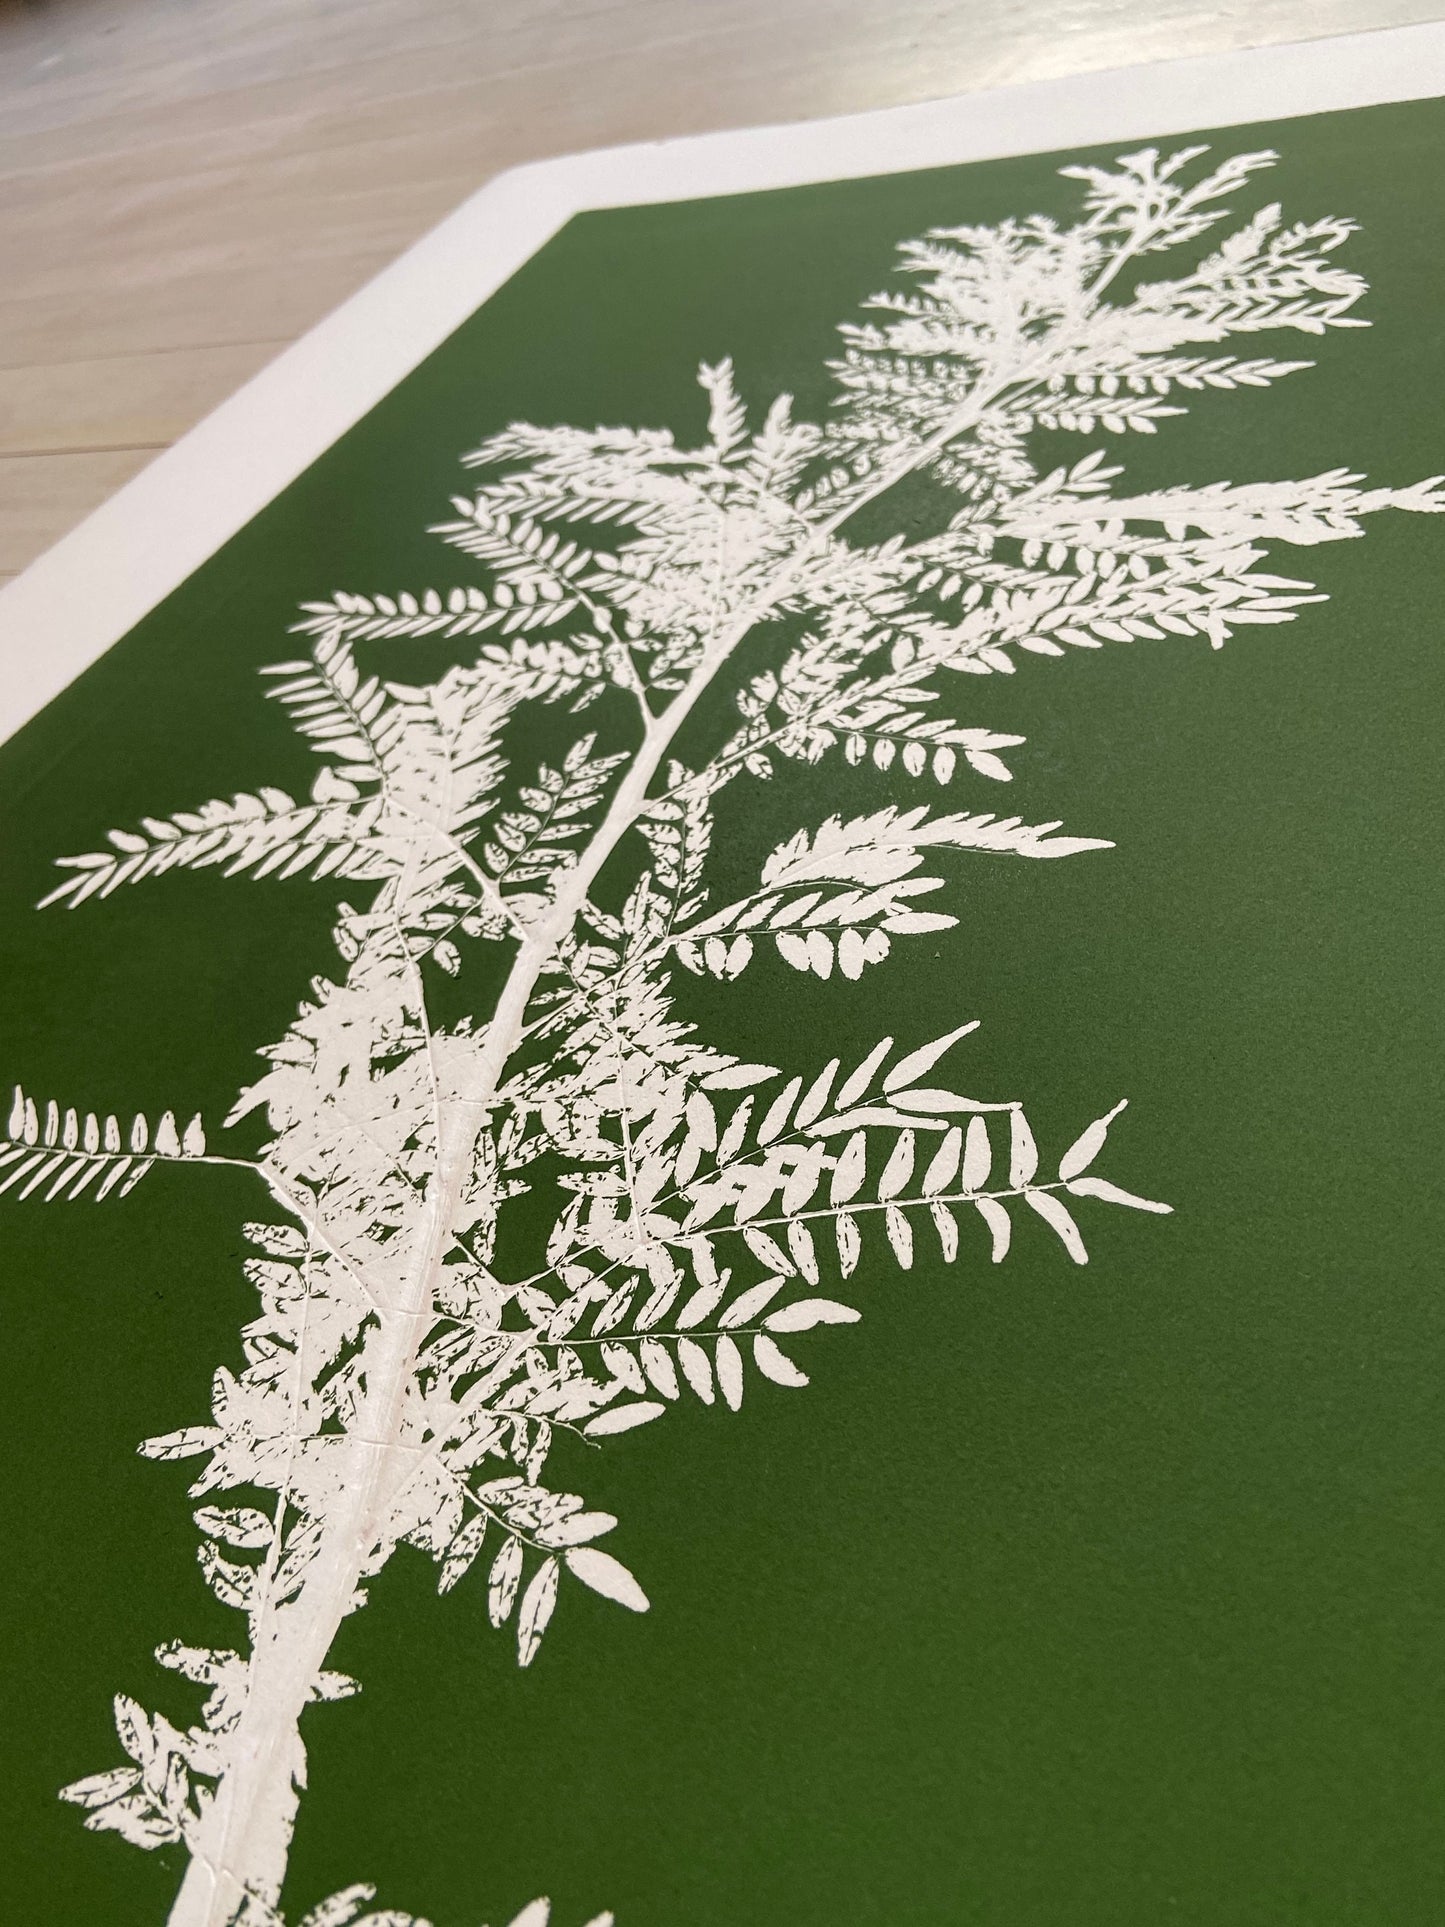 Locust Branch Hand Pressed Monoprint on Green - giclee print